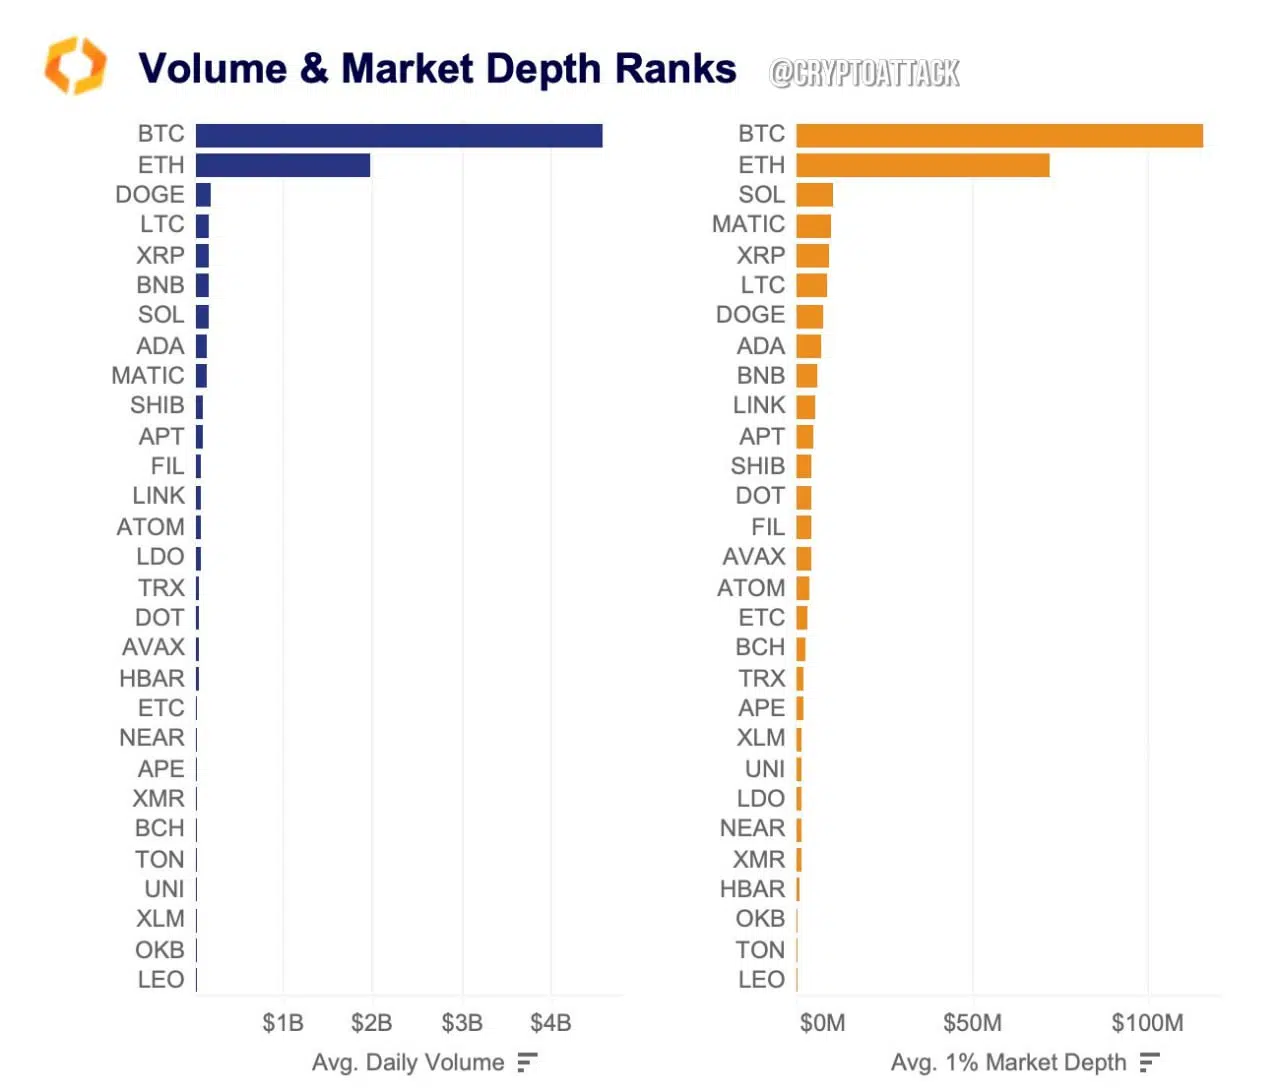 Volume and market depth ranks